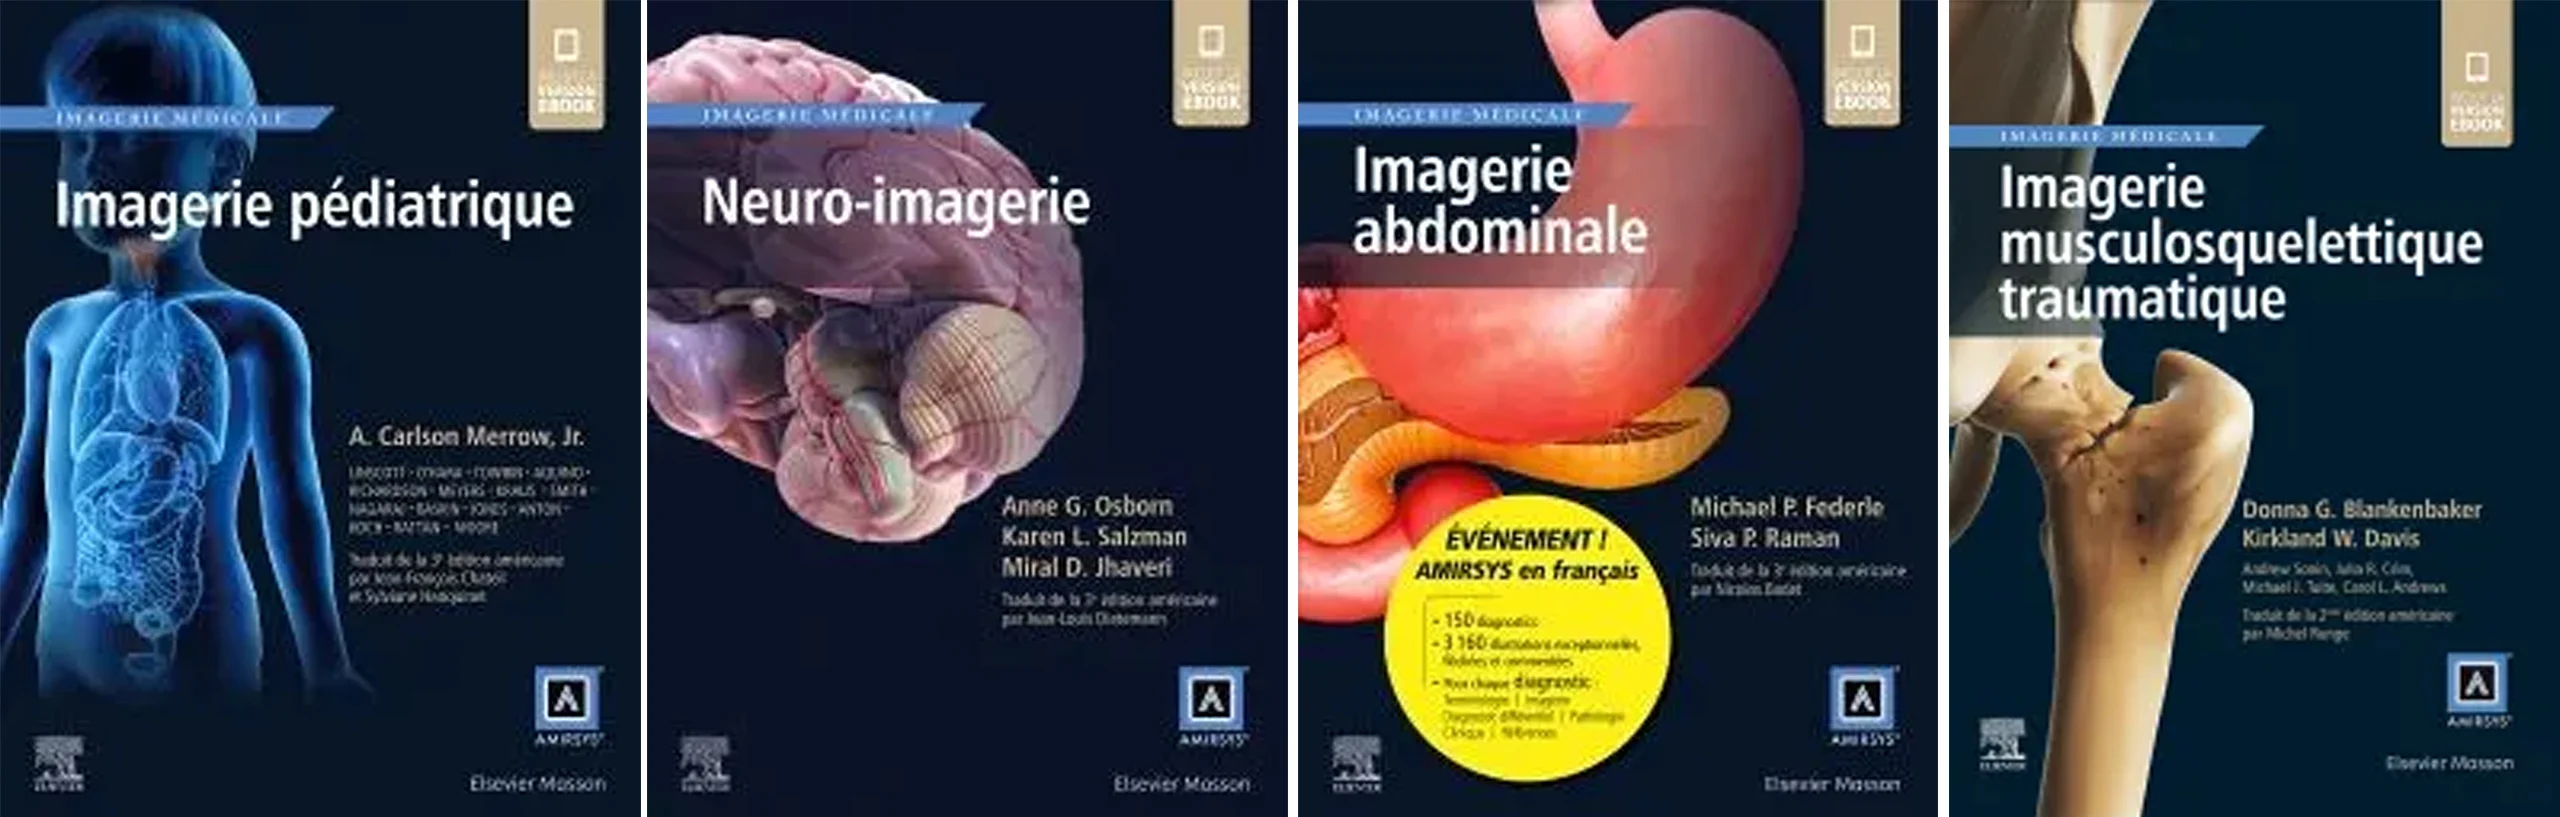 Imagerie Pédiatrique, Neuro-imagerie, Imagerie abdominale, and Imagerie musculosquelettique traumatique